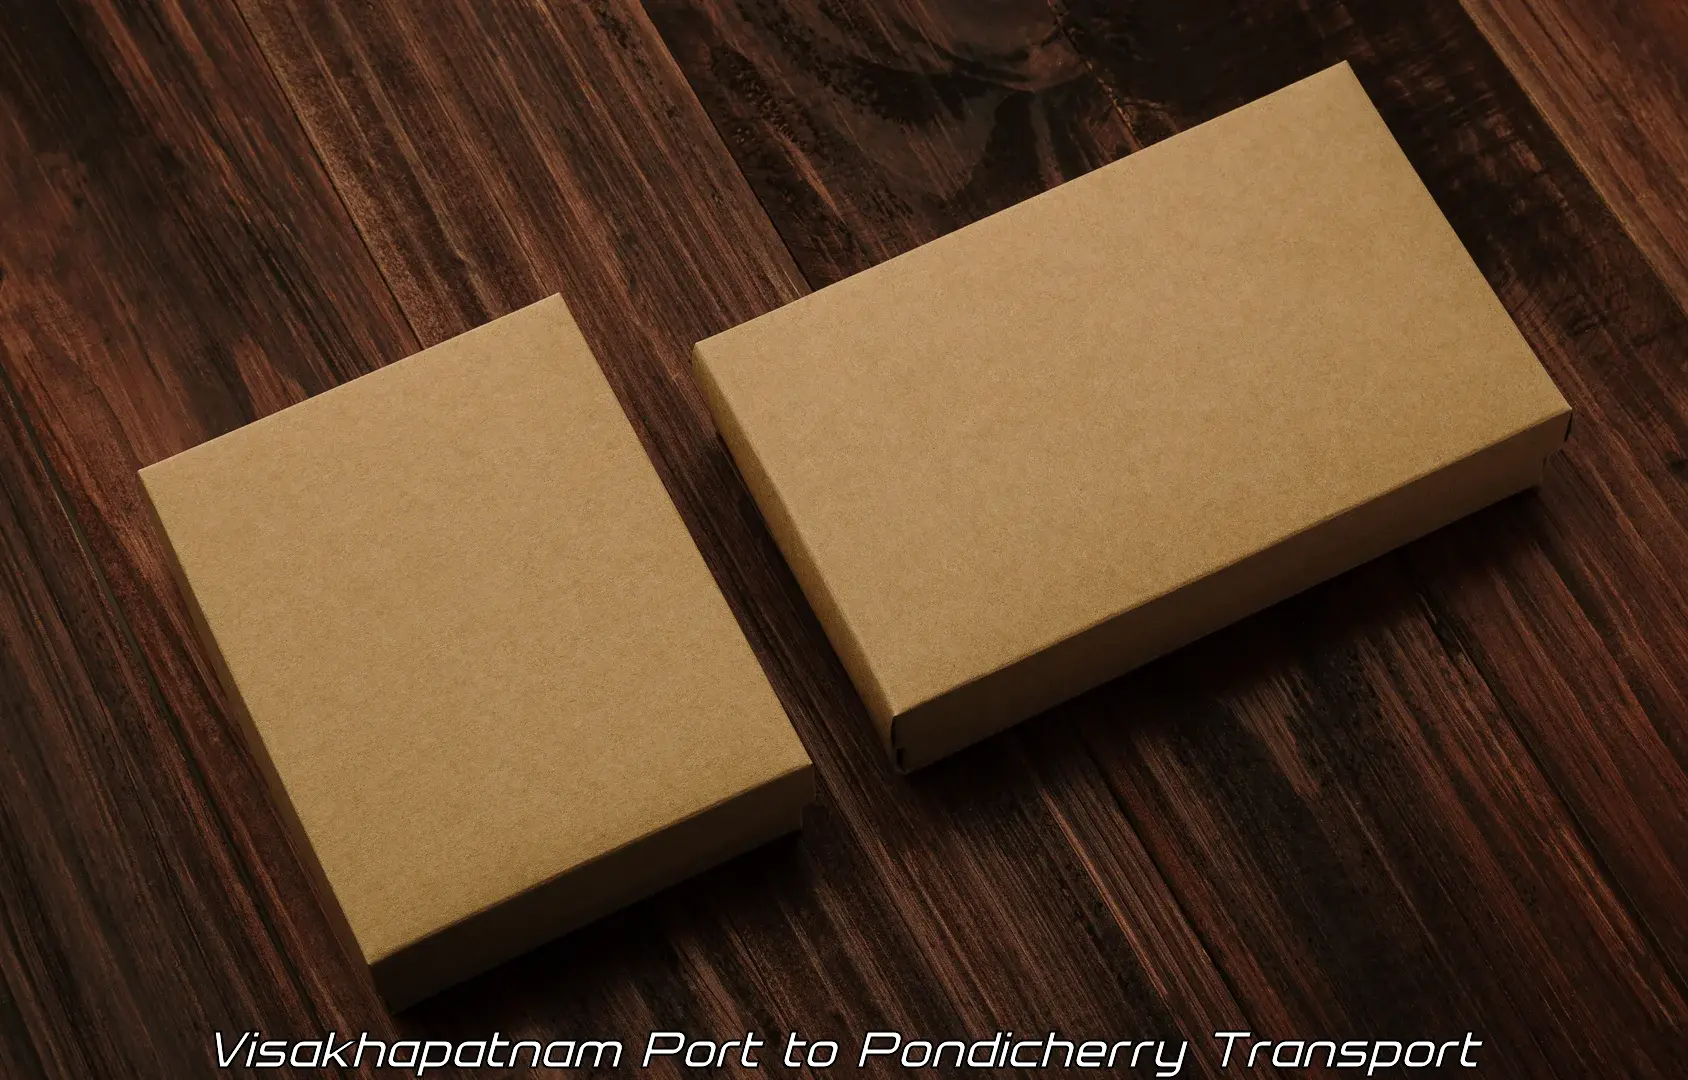 Daily parcel service transport in Visakhapatnam Port to Pondicherry